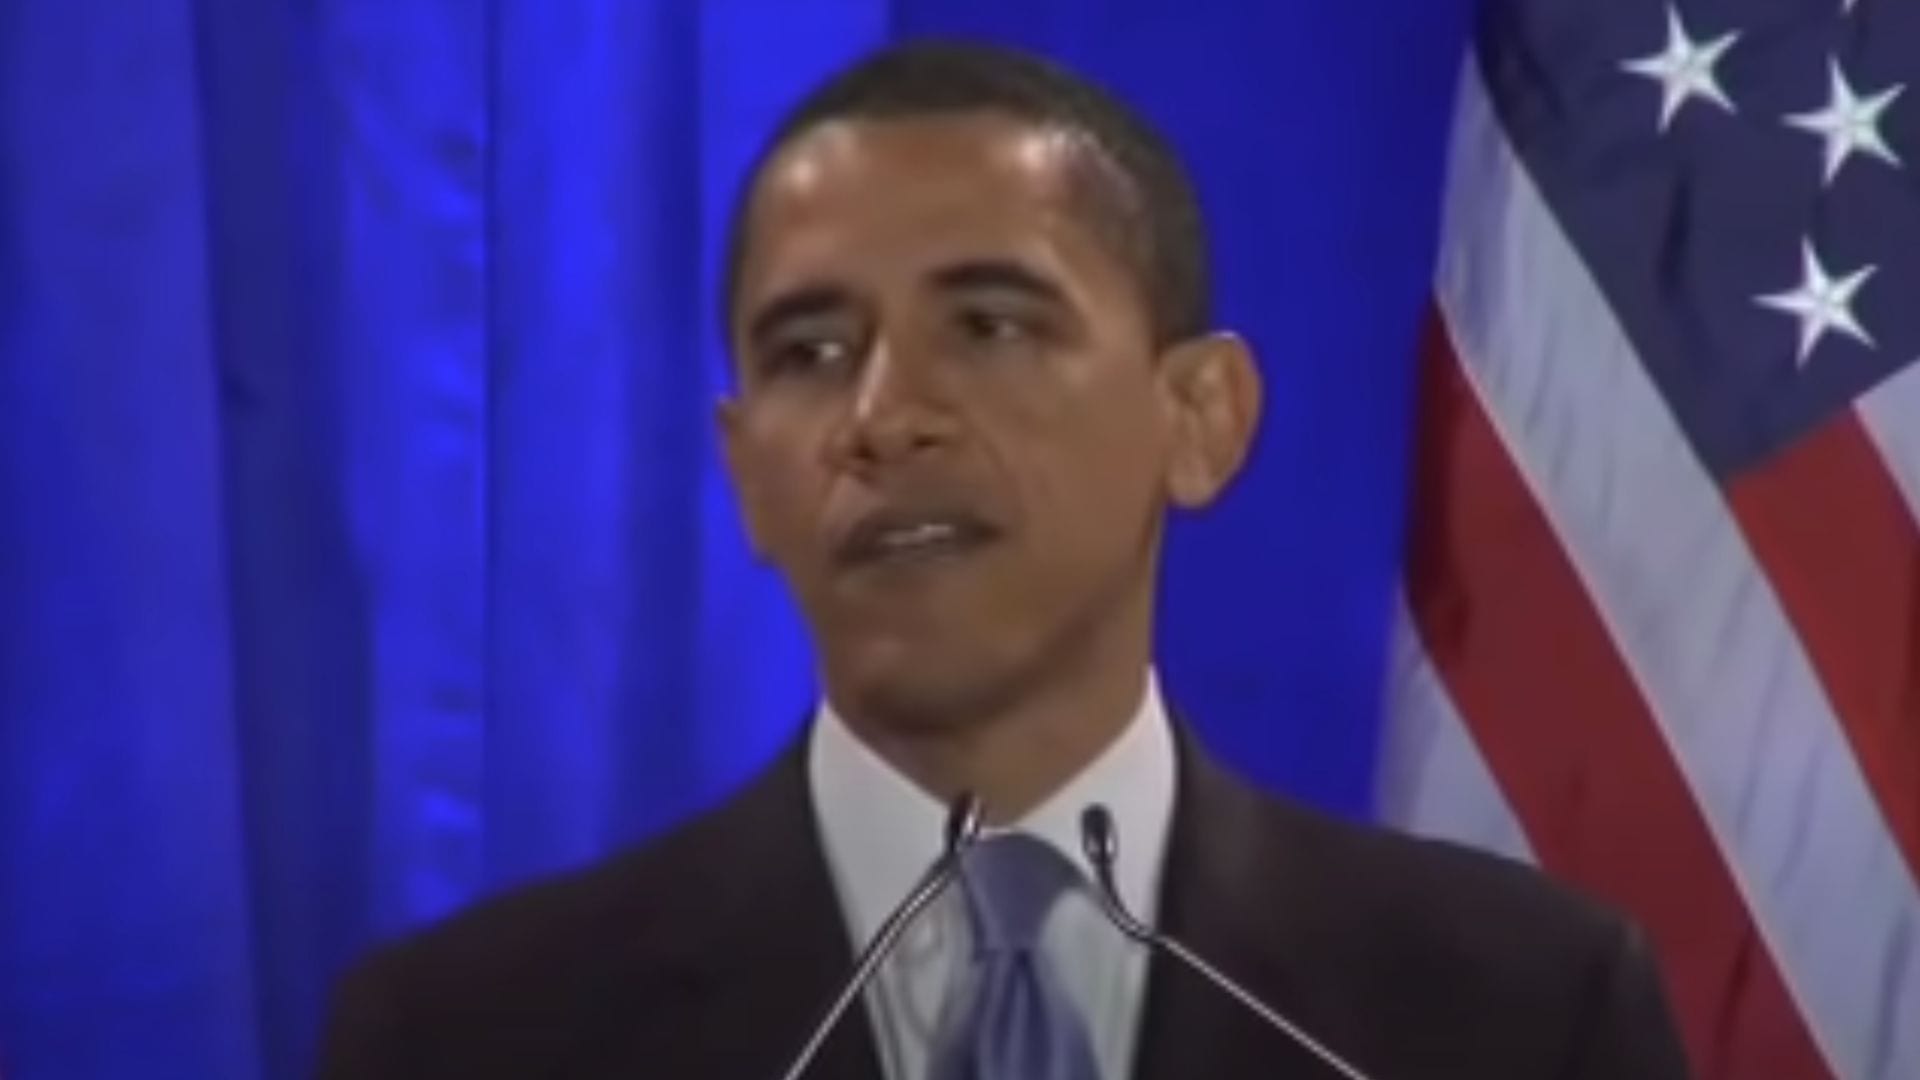 Barack Obama More Perfect Union Speech